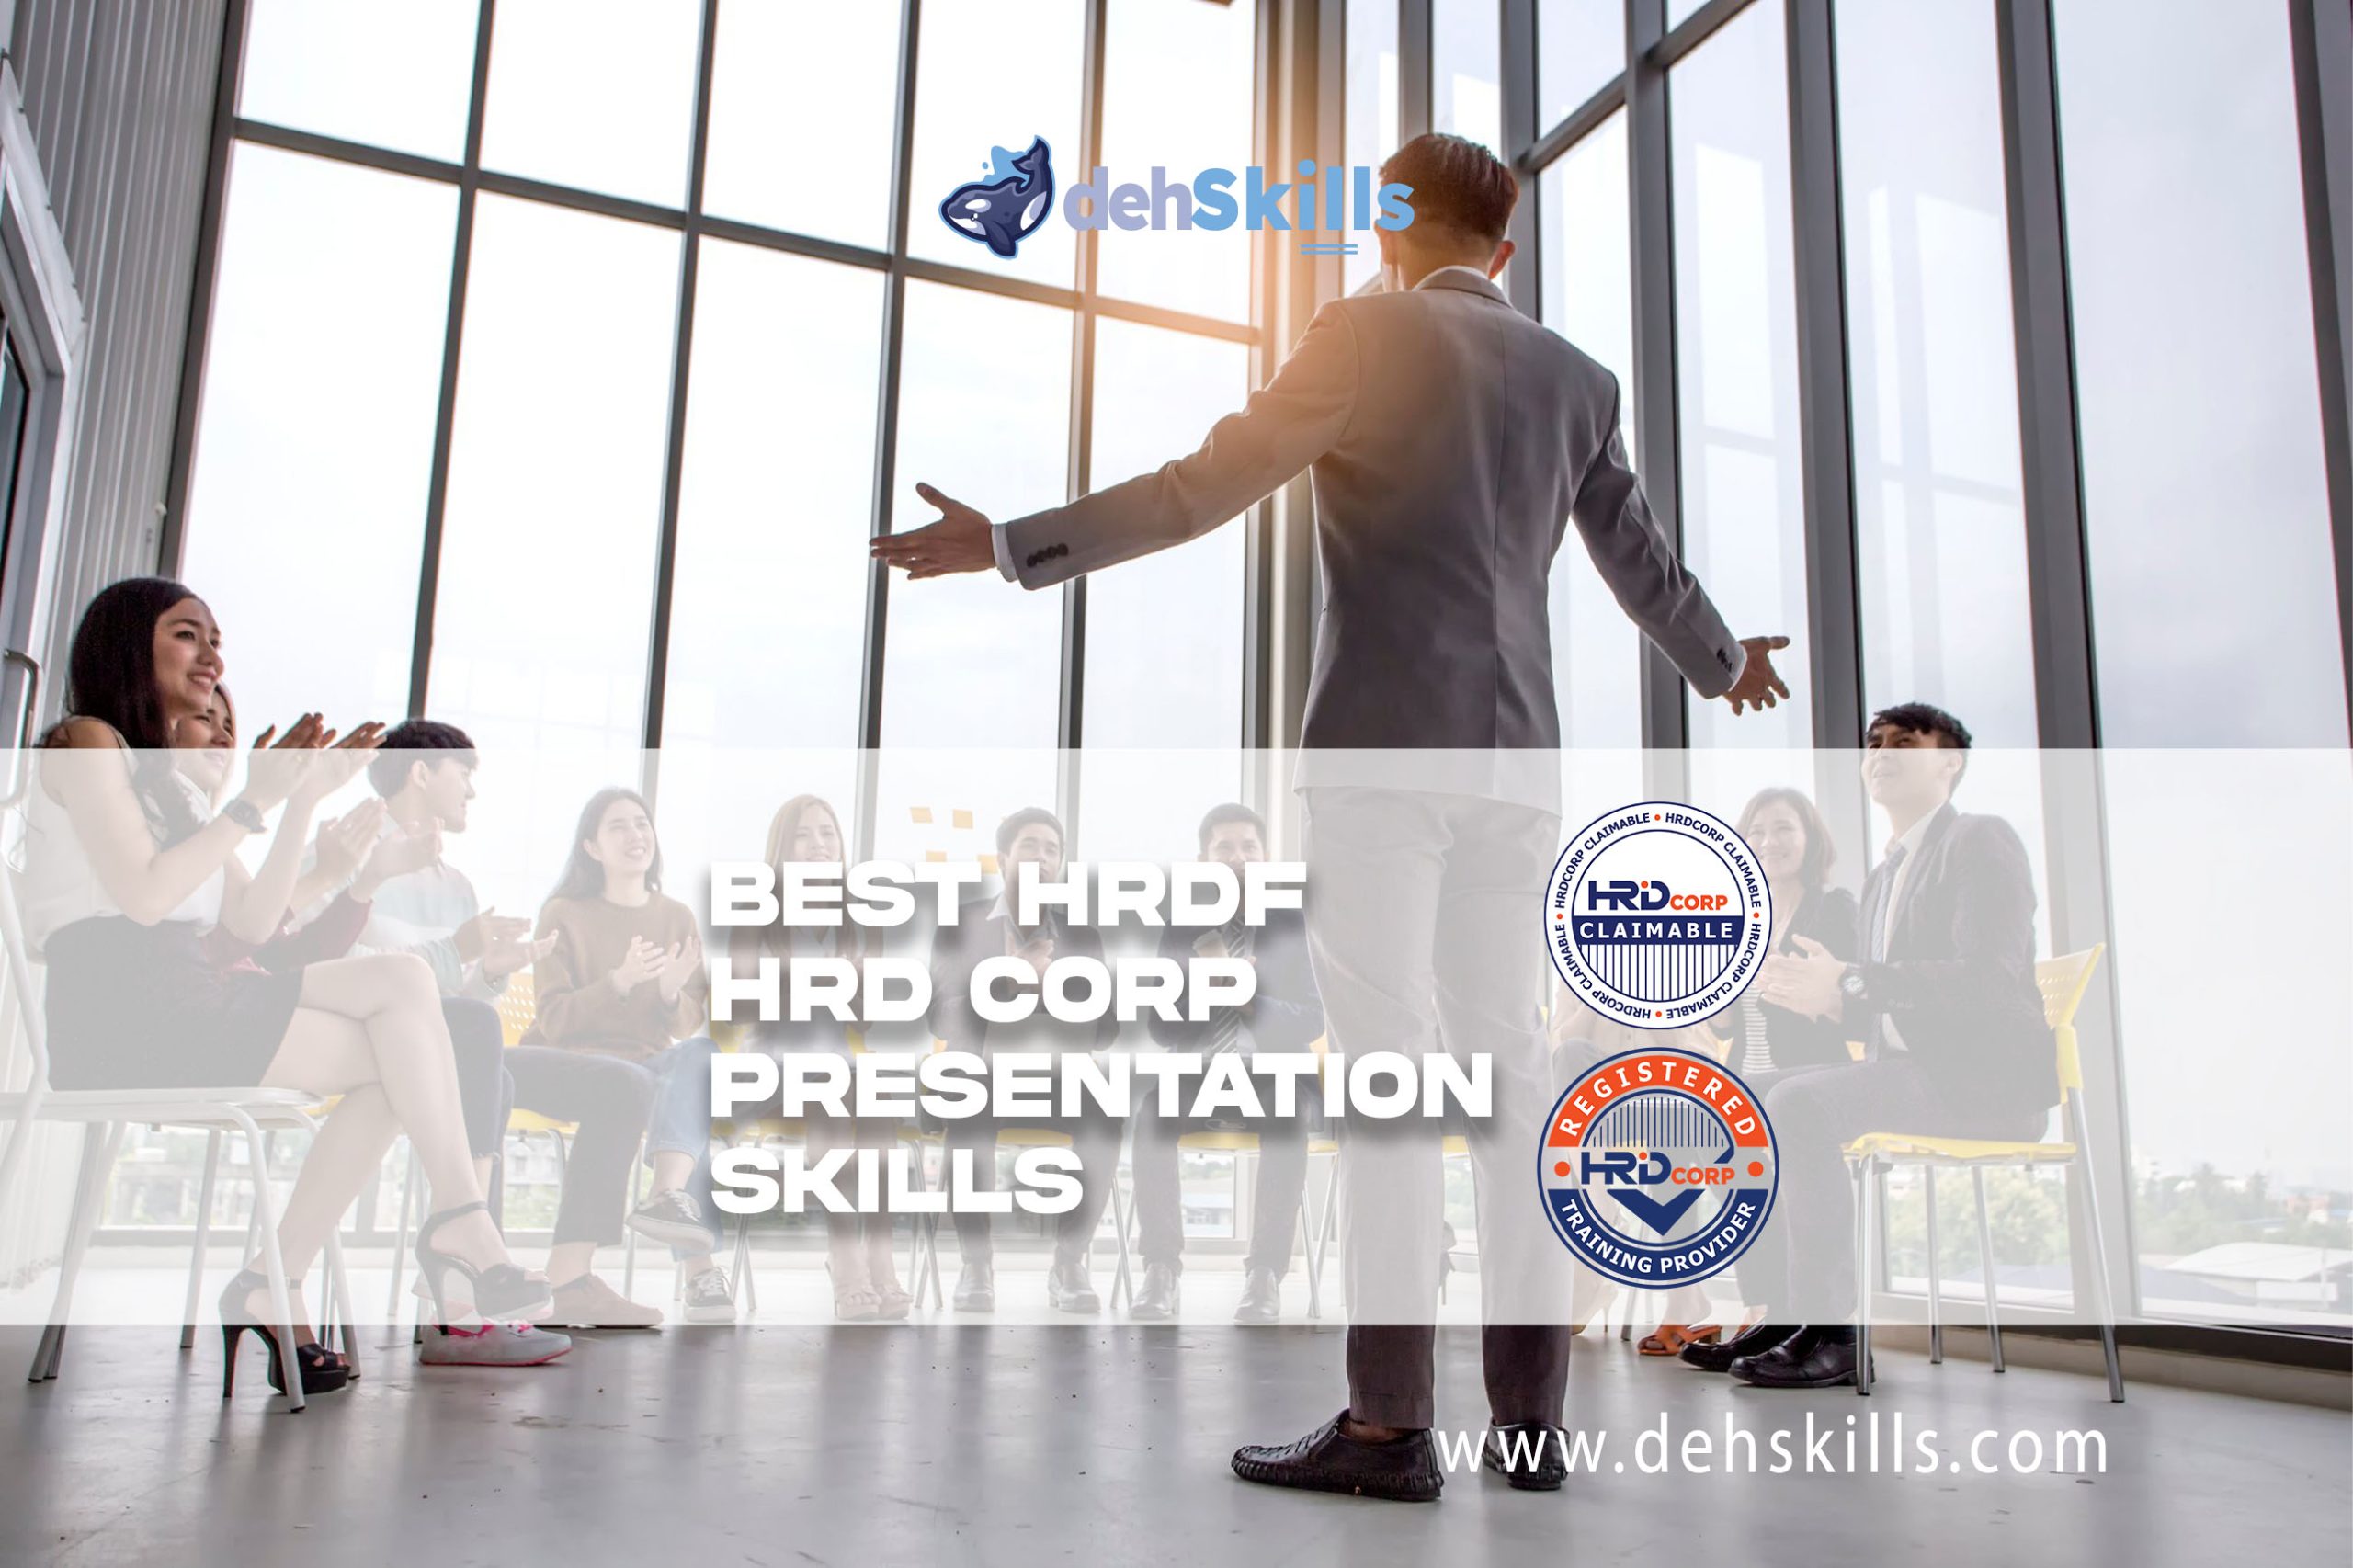 HRDF HRD Corp Claimable Presentation Skills Training